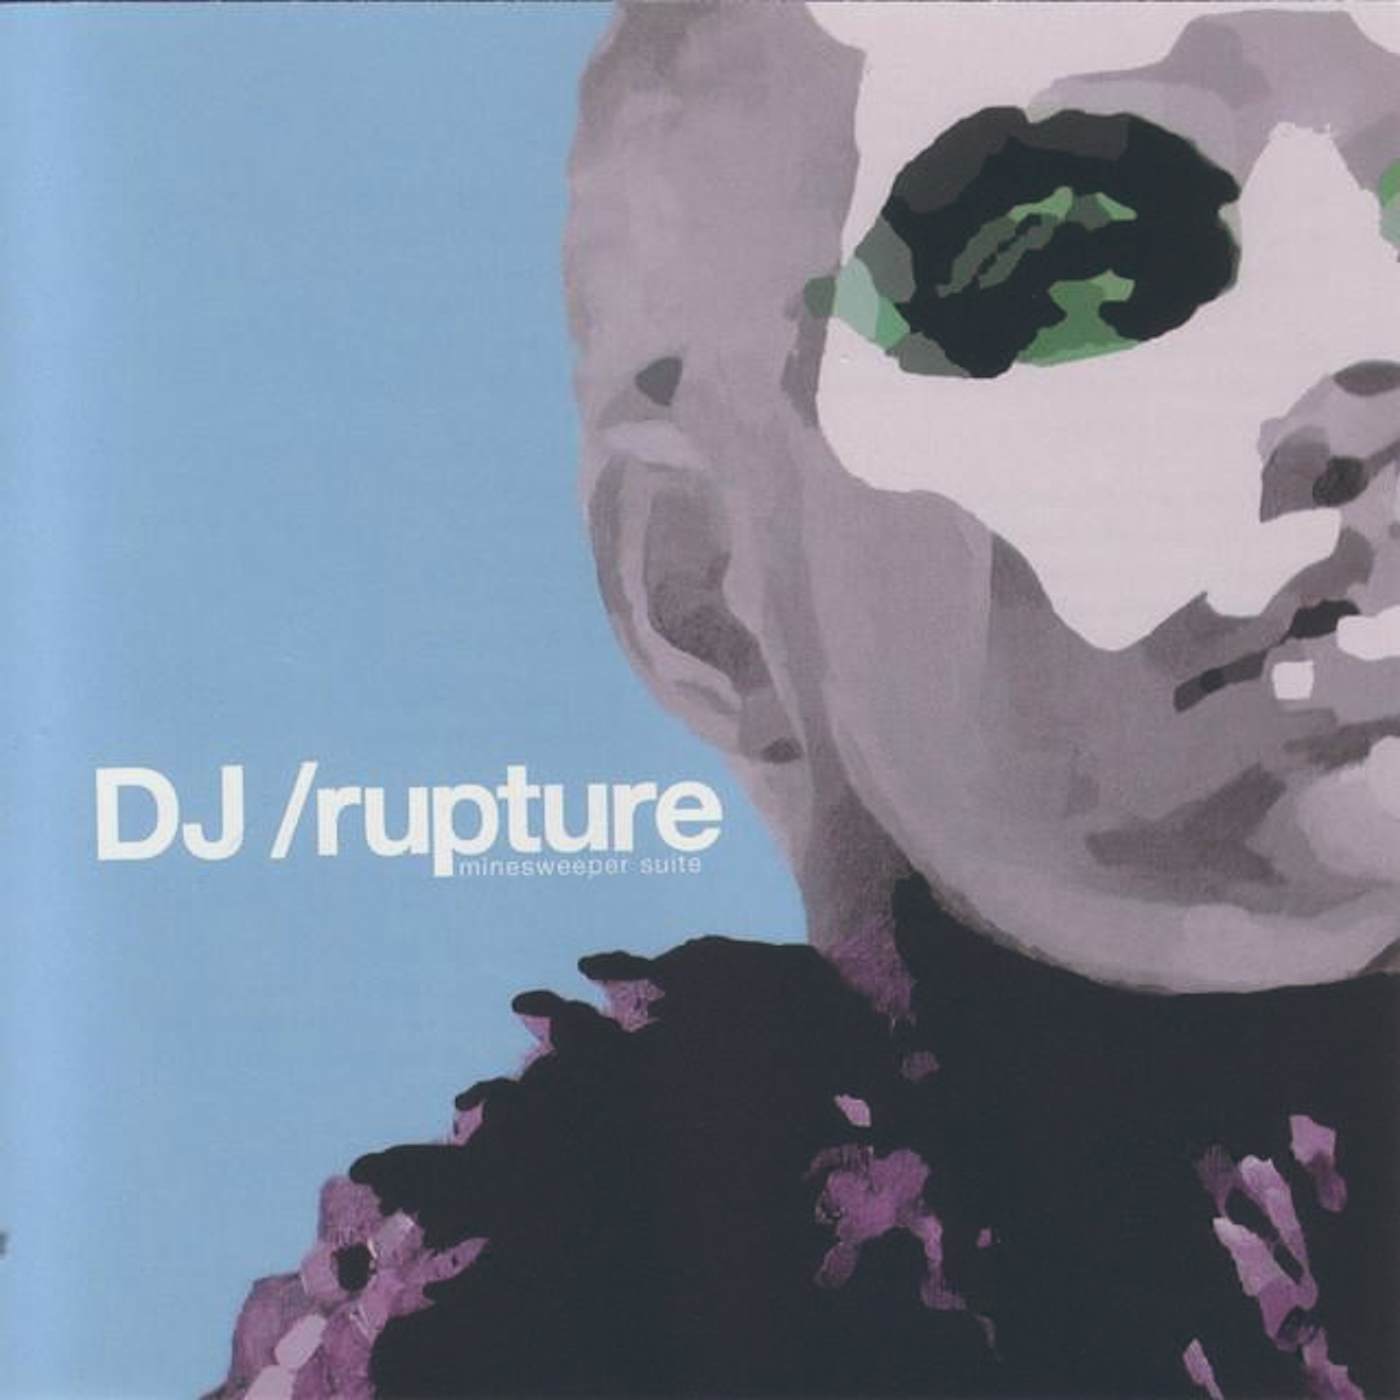 DJ /Rupture